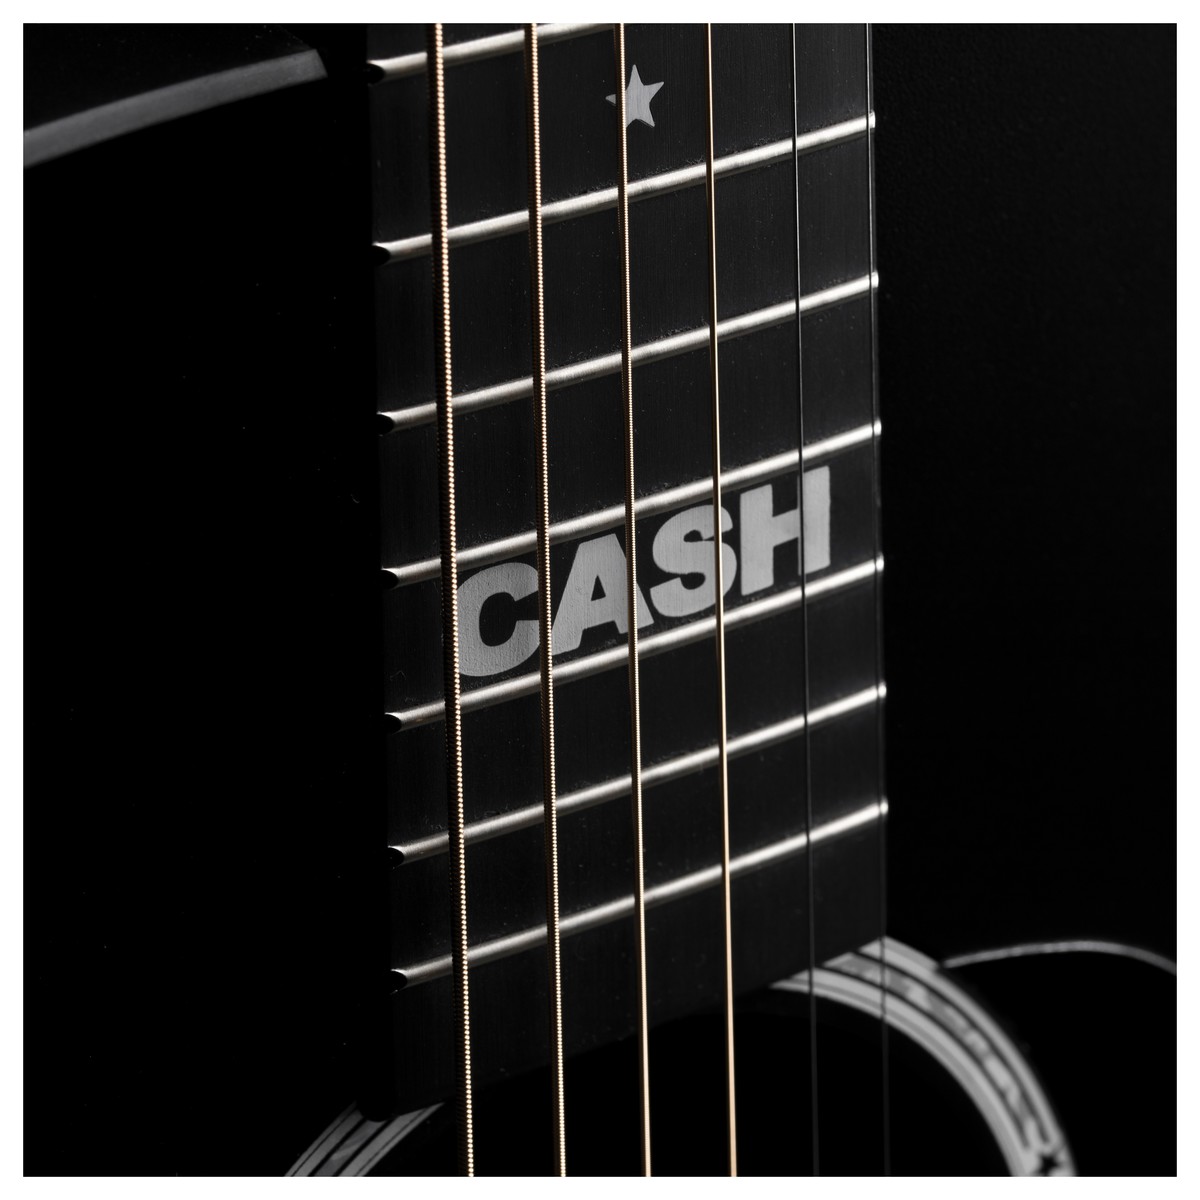 Martin Johnny Cash Dx Signature Dreadnought Hpl Ric - Black - Elektroakustische Gitarre - Variation 4